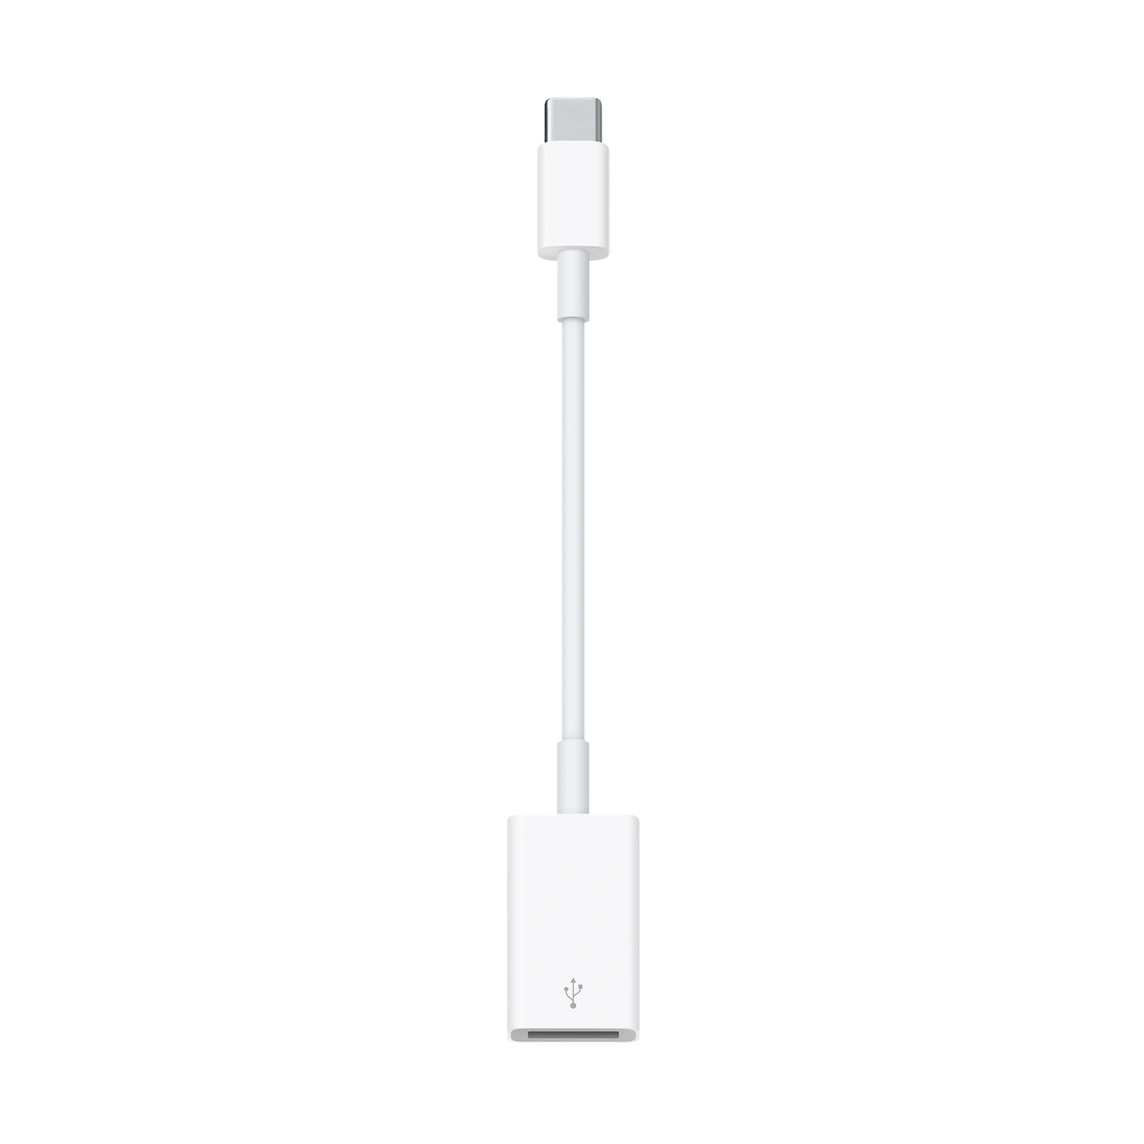 apple-usb-c-to-usb-adapter